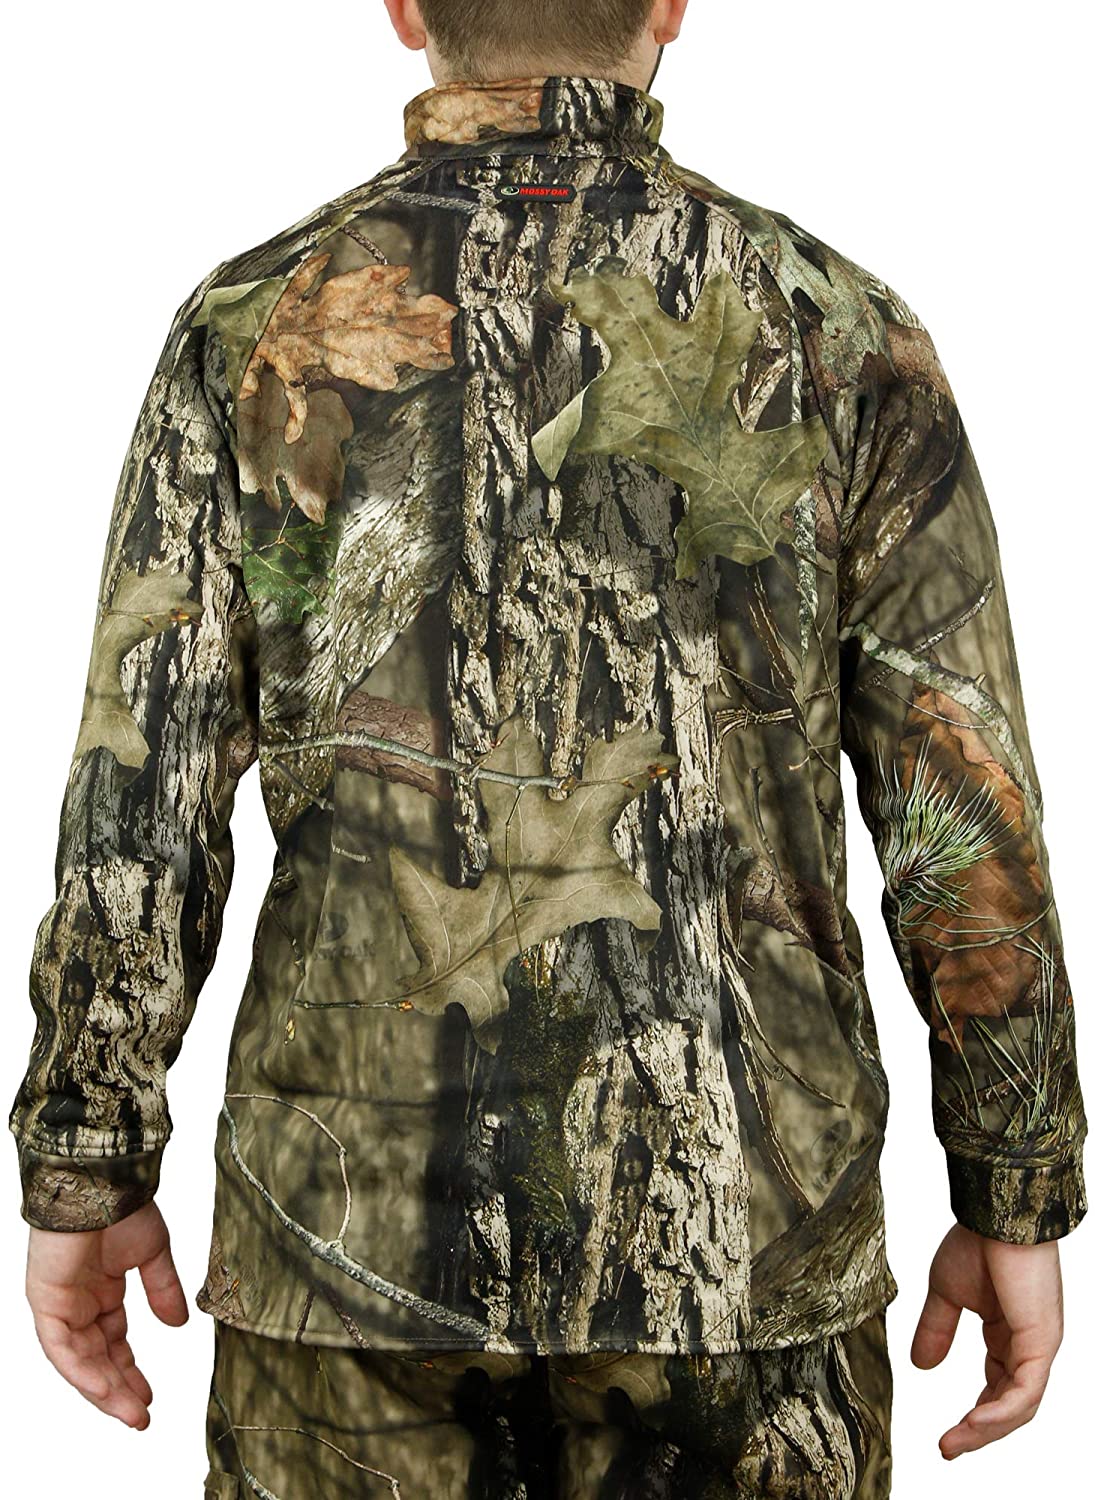 Mossy Oak Camo Hunting Jacket for Men Fleece Quarter Zip Pullover | eBay